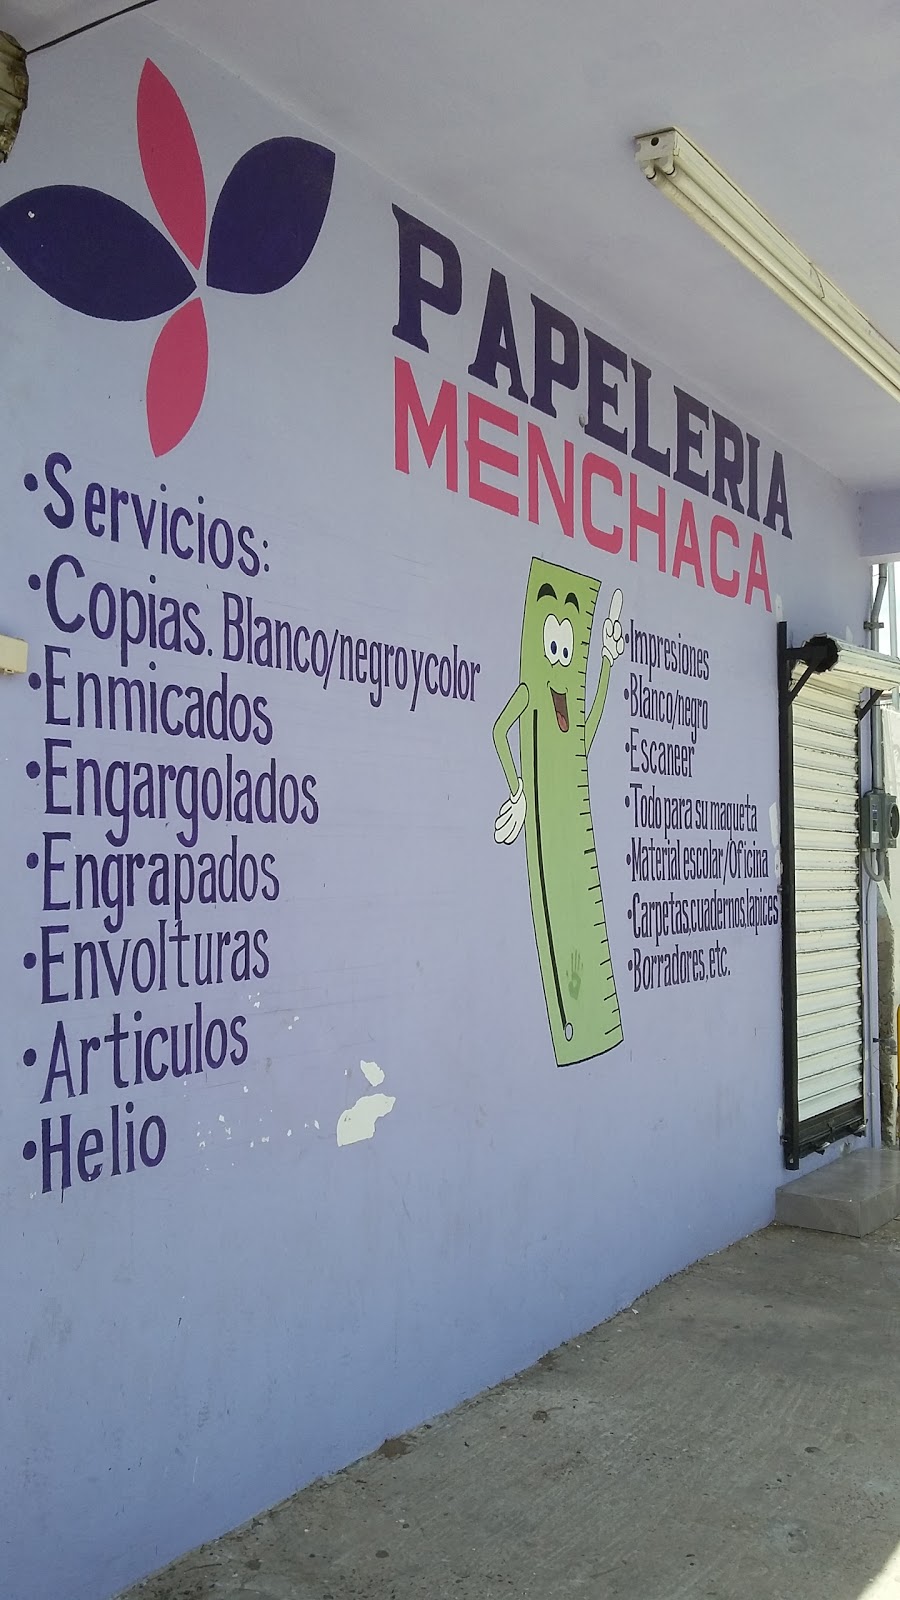 Papeleria Menchaca | Abraham Lincoln 2115B, Colonia Viveros, 88070 Nuevo Laredo, Tamps., Mexico | Phone: 867 715 1155